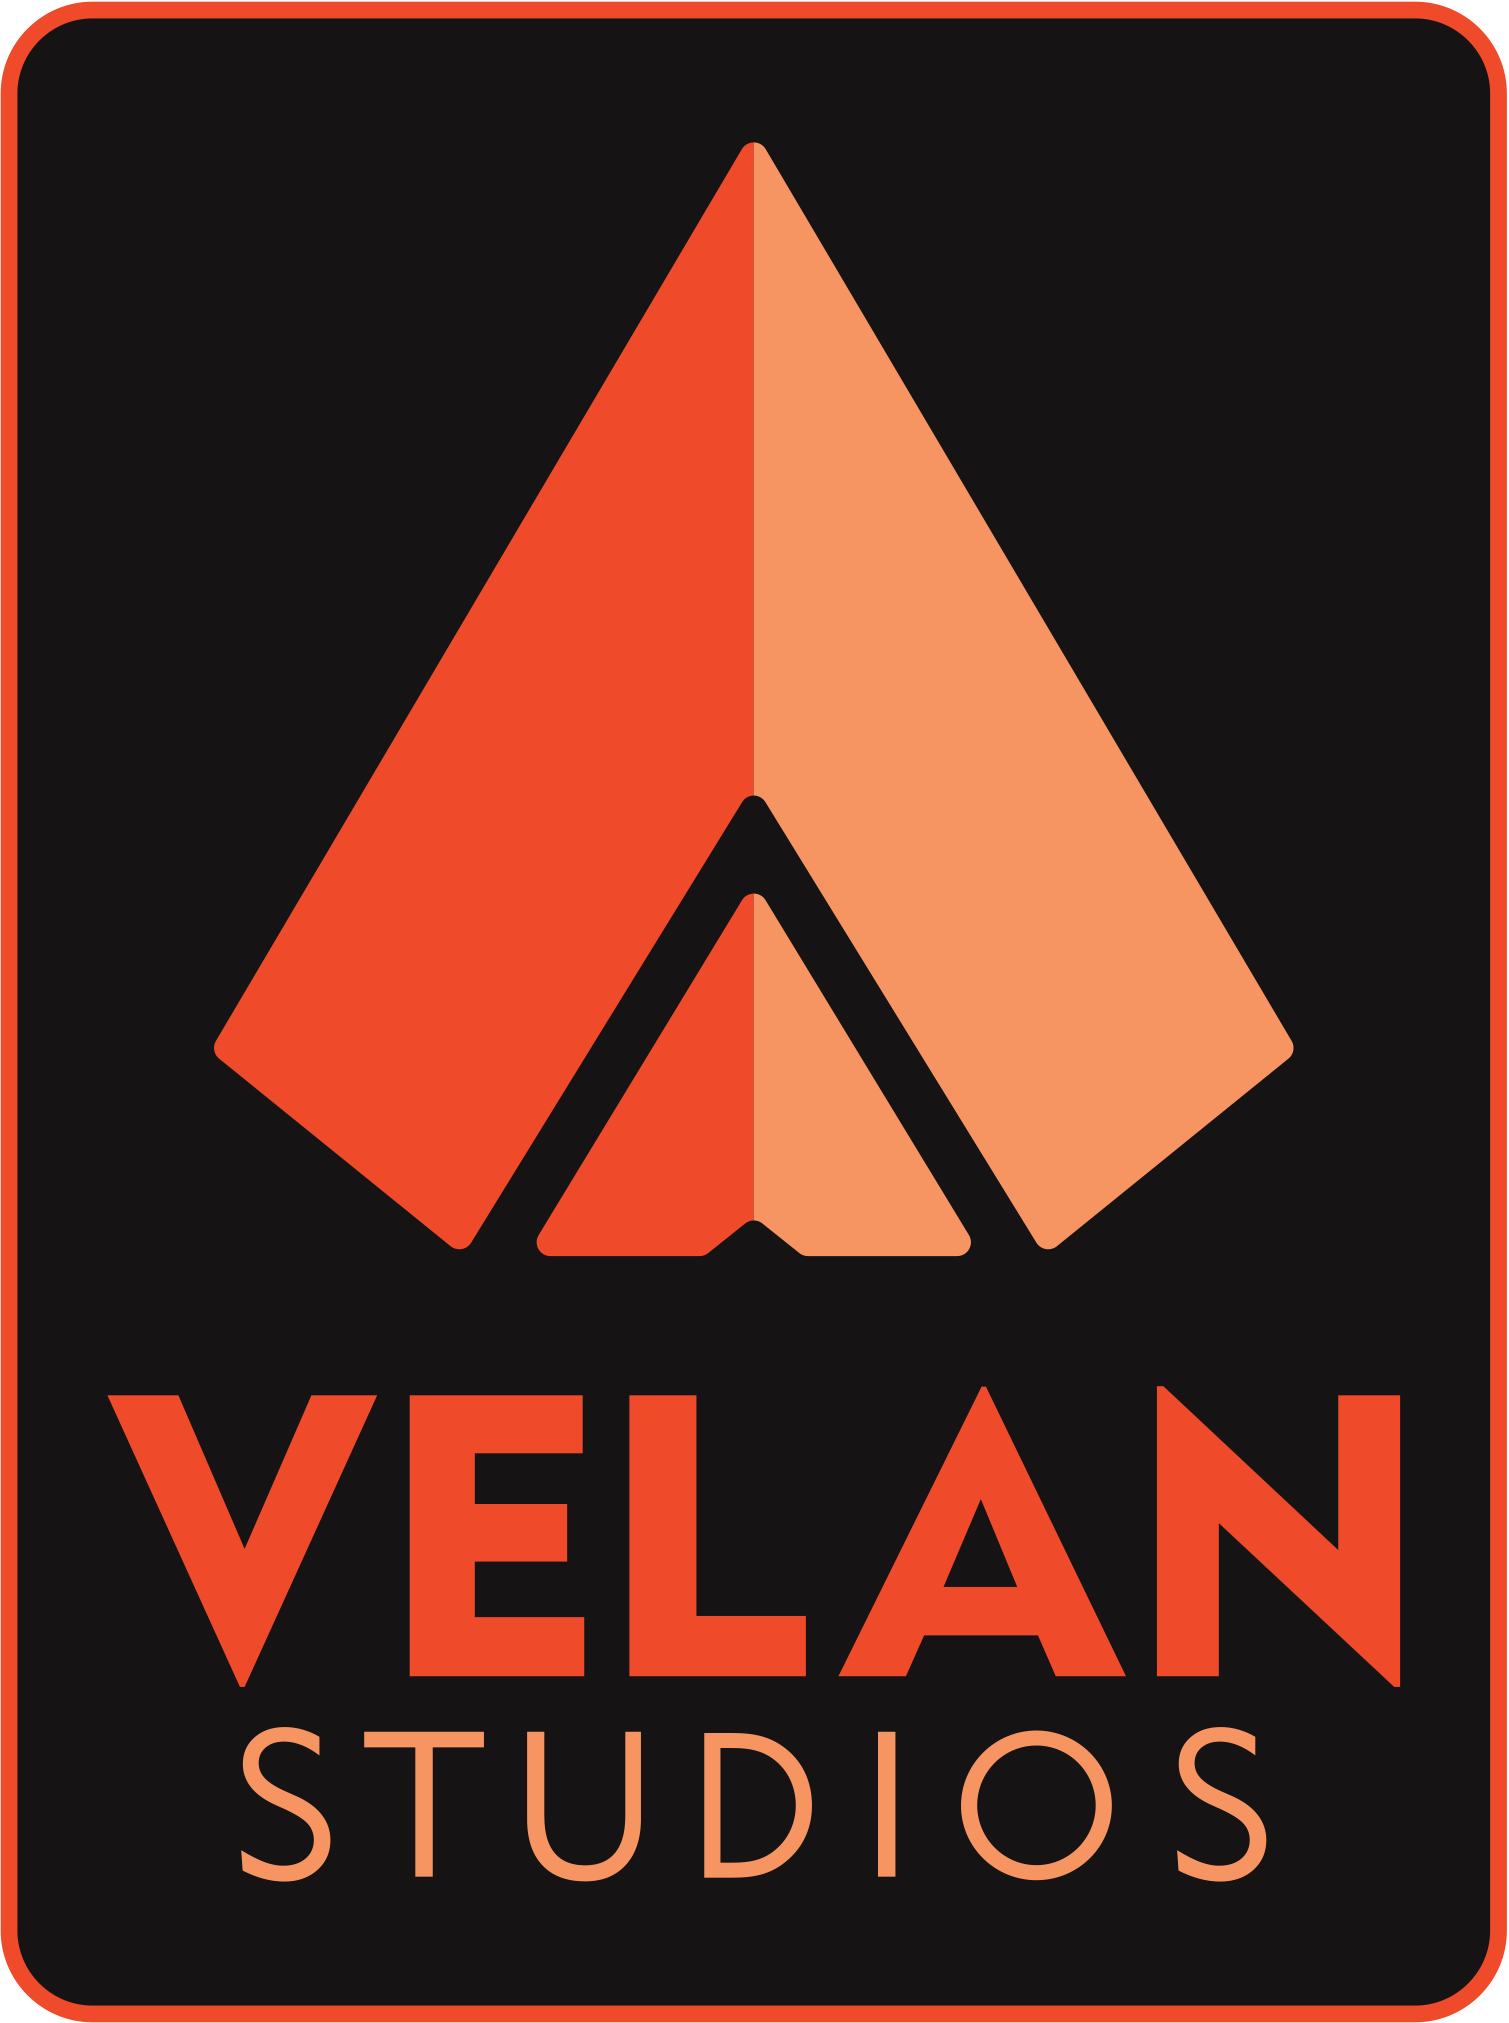 Velan Studios